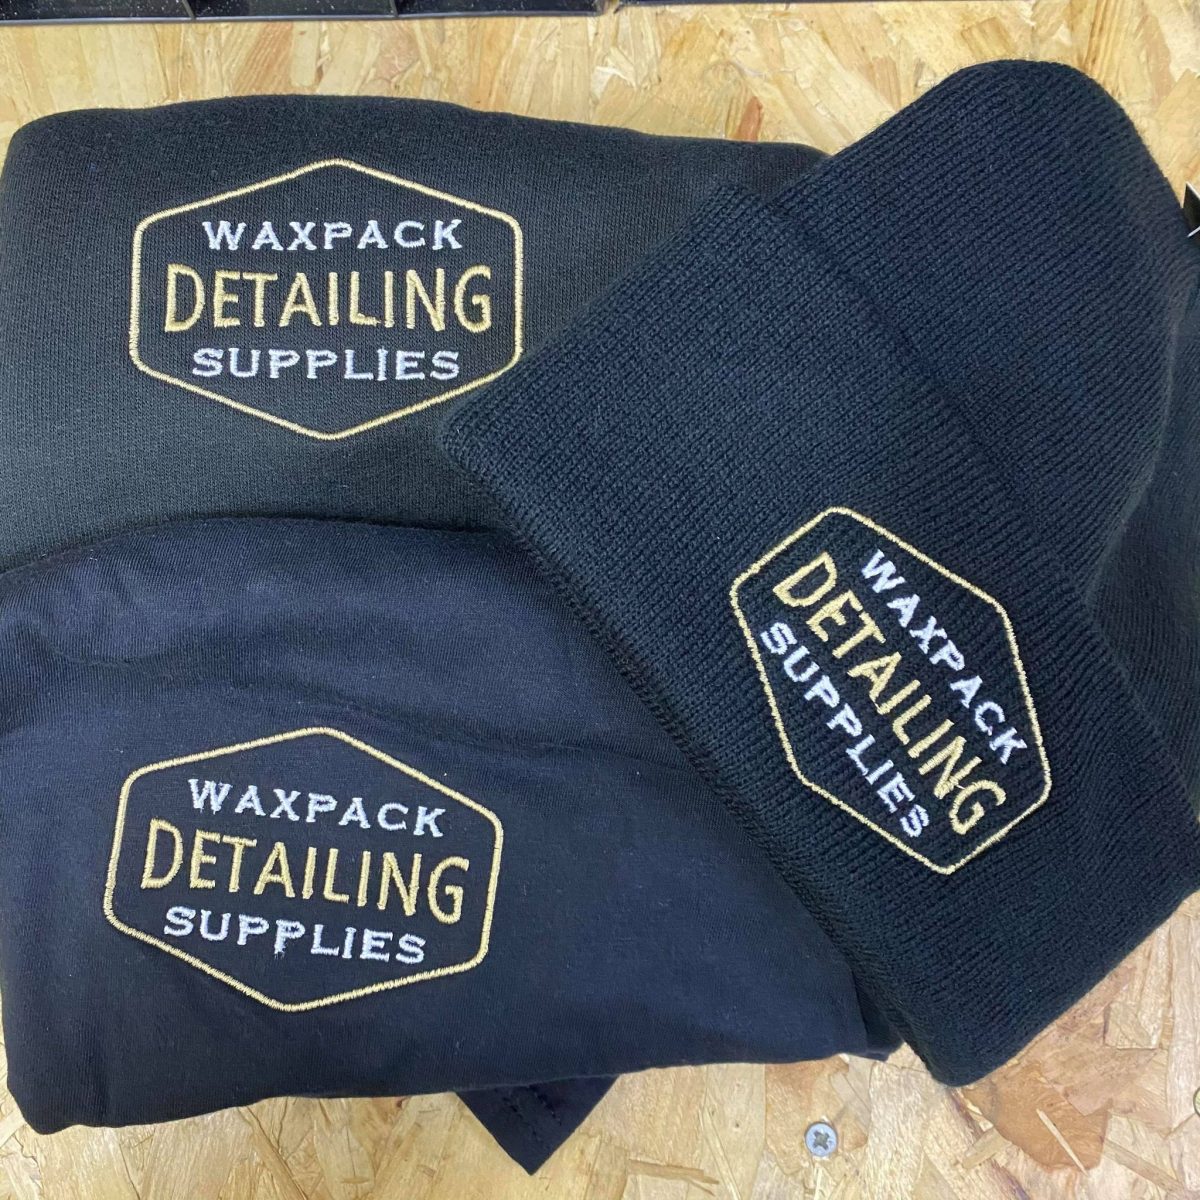 Waxpack clothing bundle